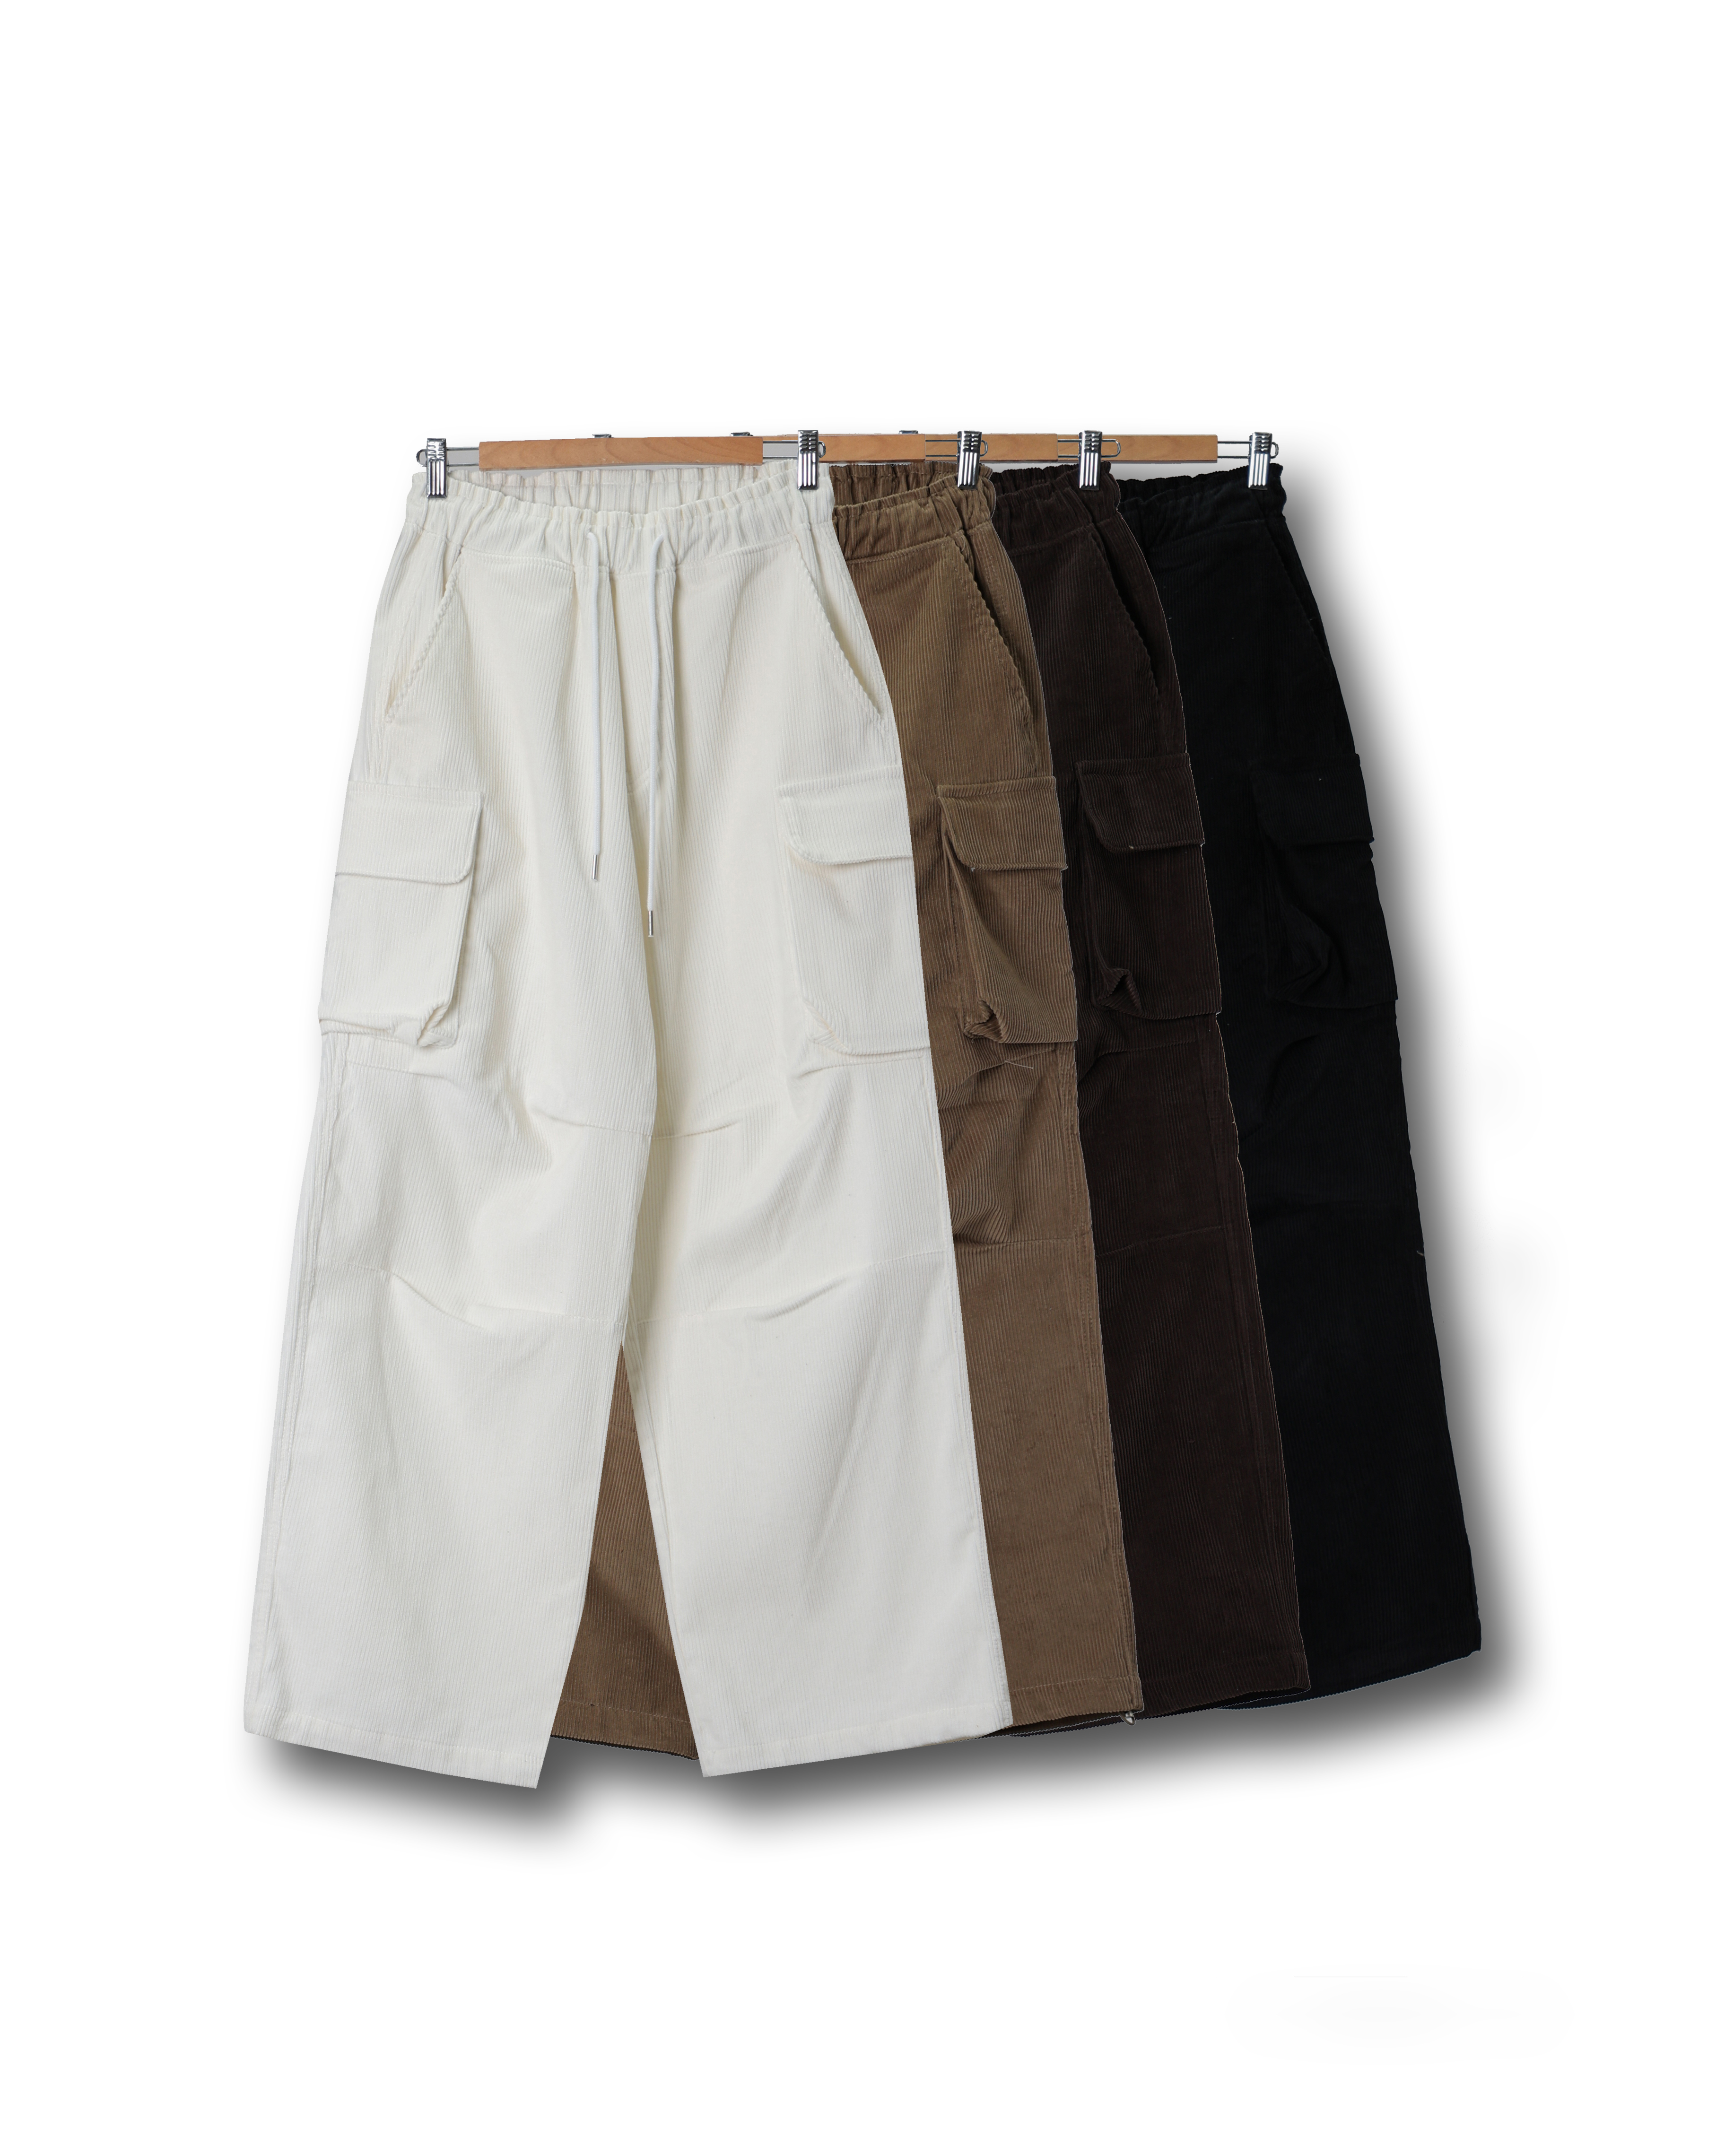 UNBO Corduroy Parachute Cargo Pants (Black/Brown/Beige/White)